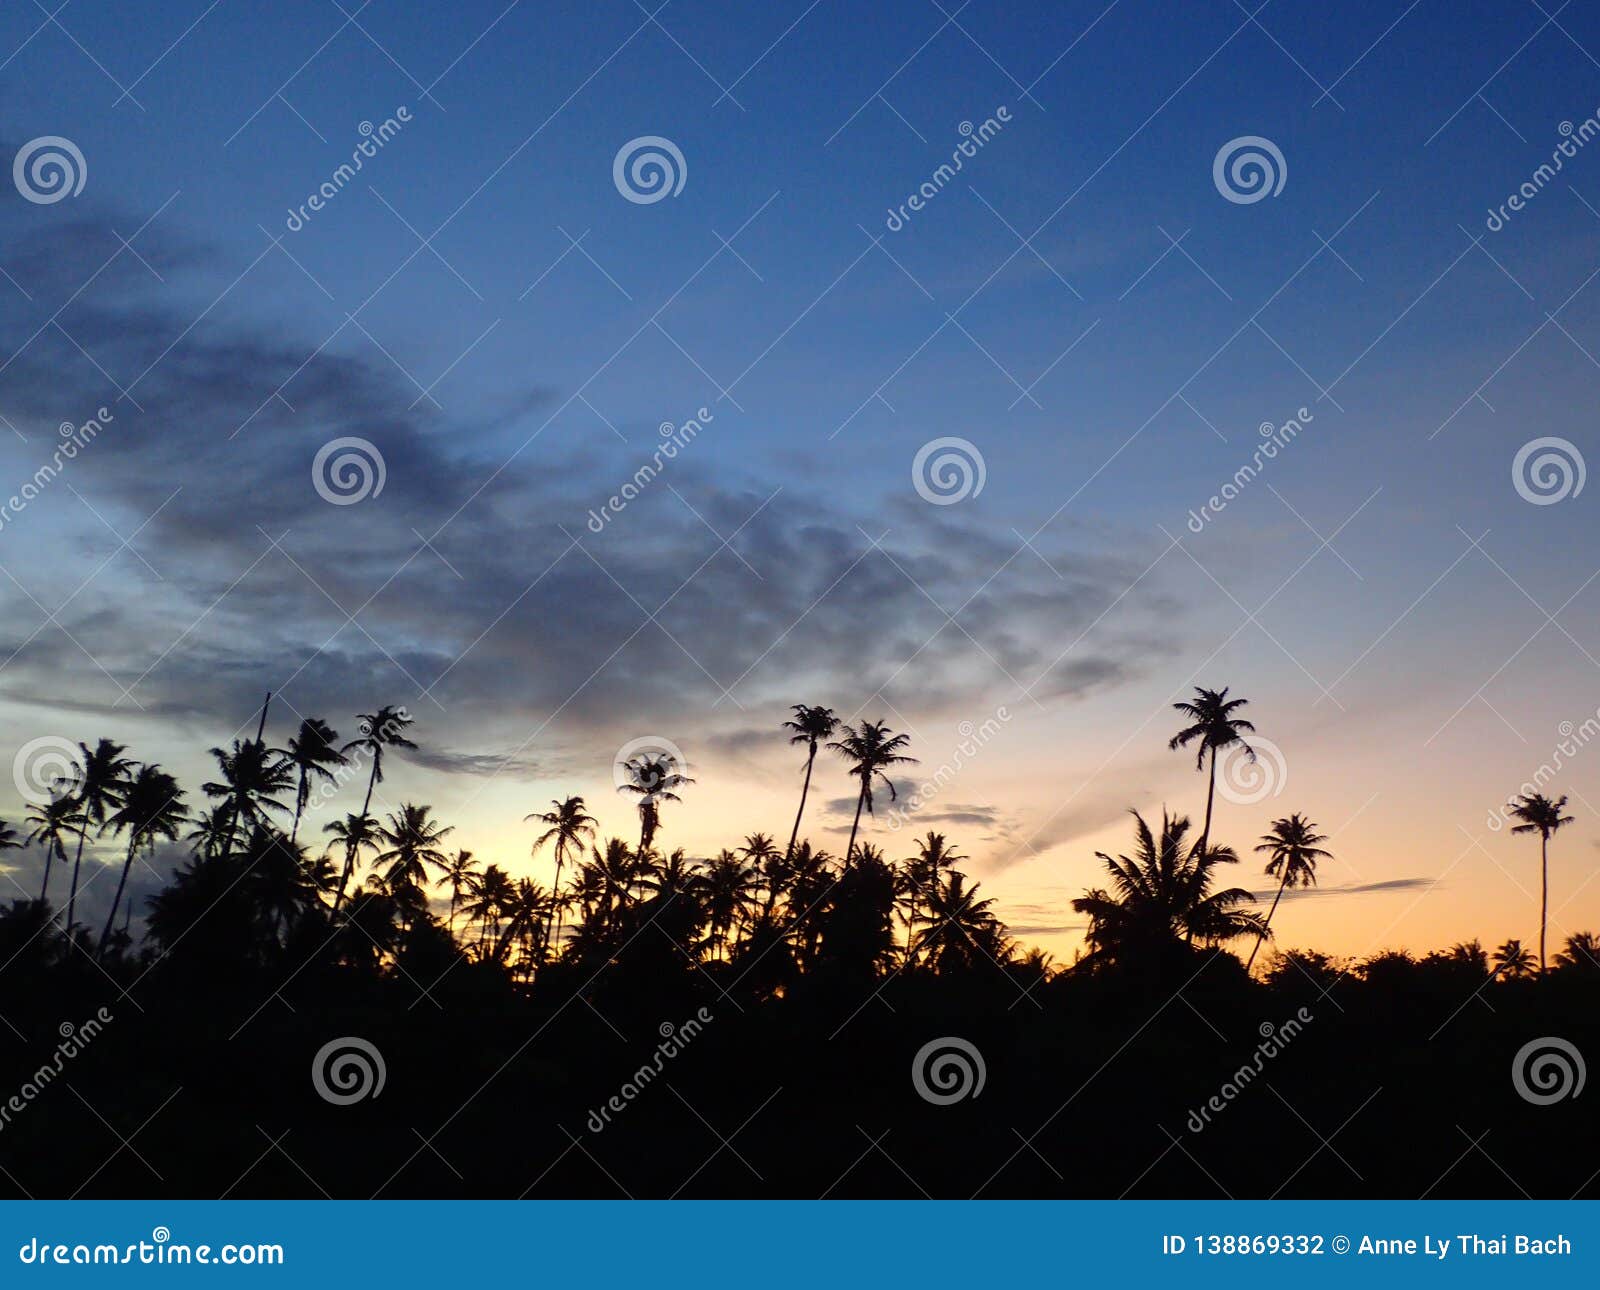 sunset on palm trees, bright colors, bora fakarava french polynesia, pontoon, deck